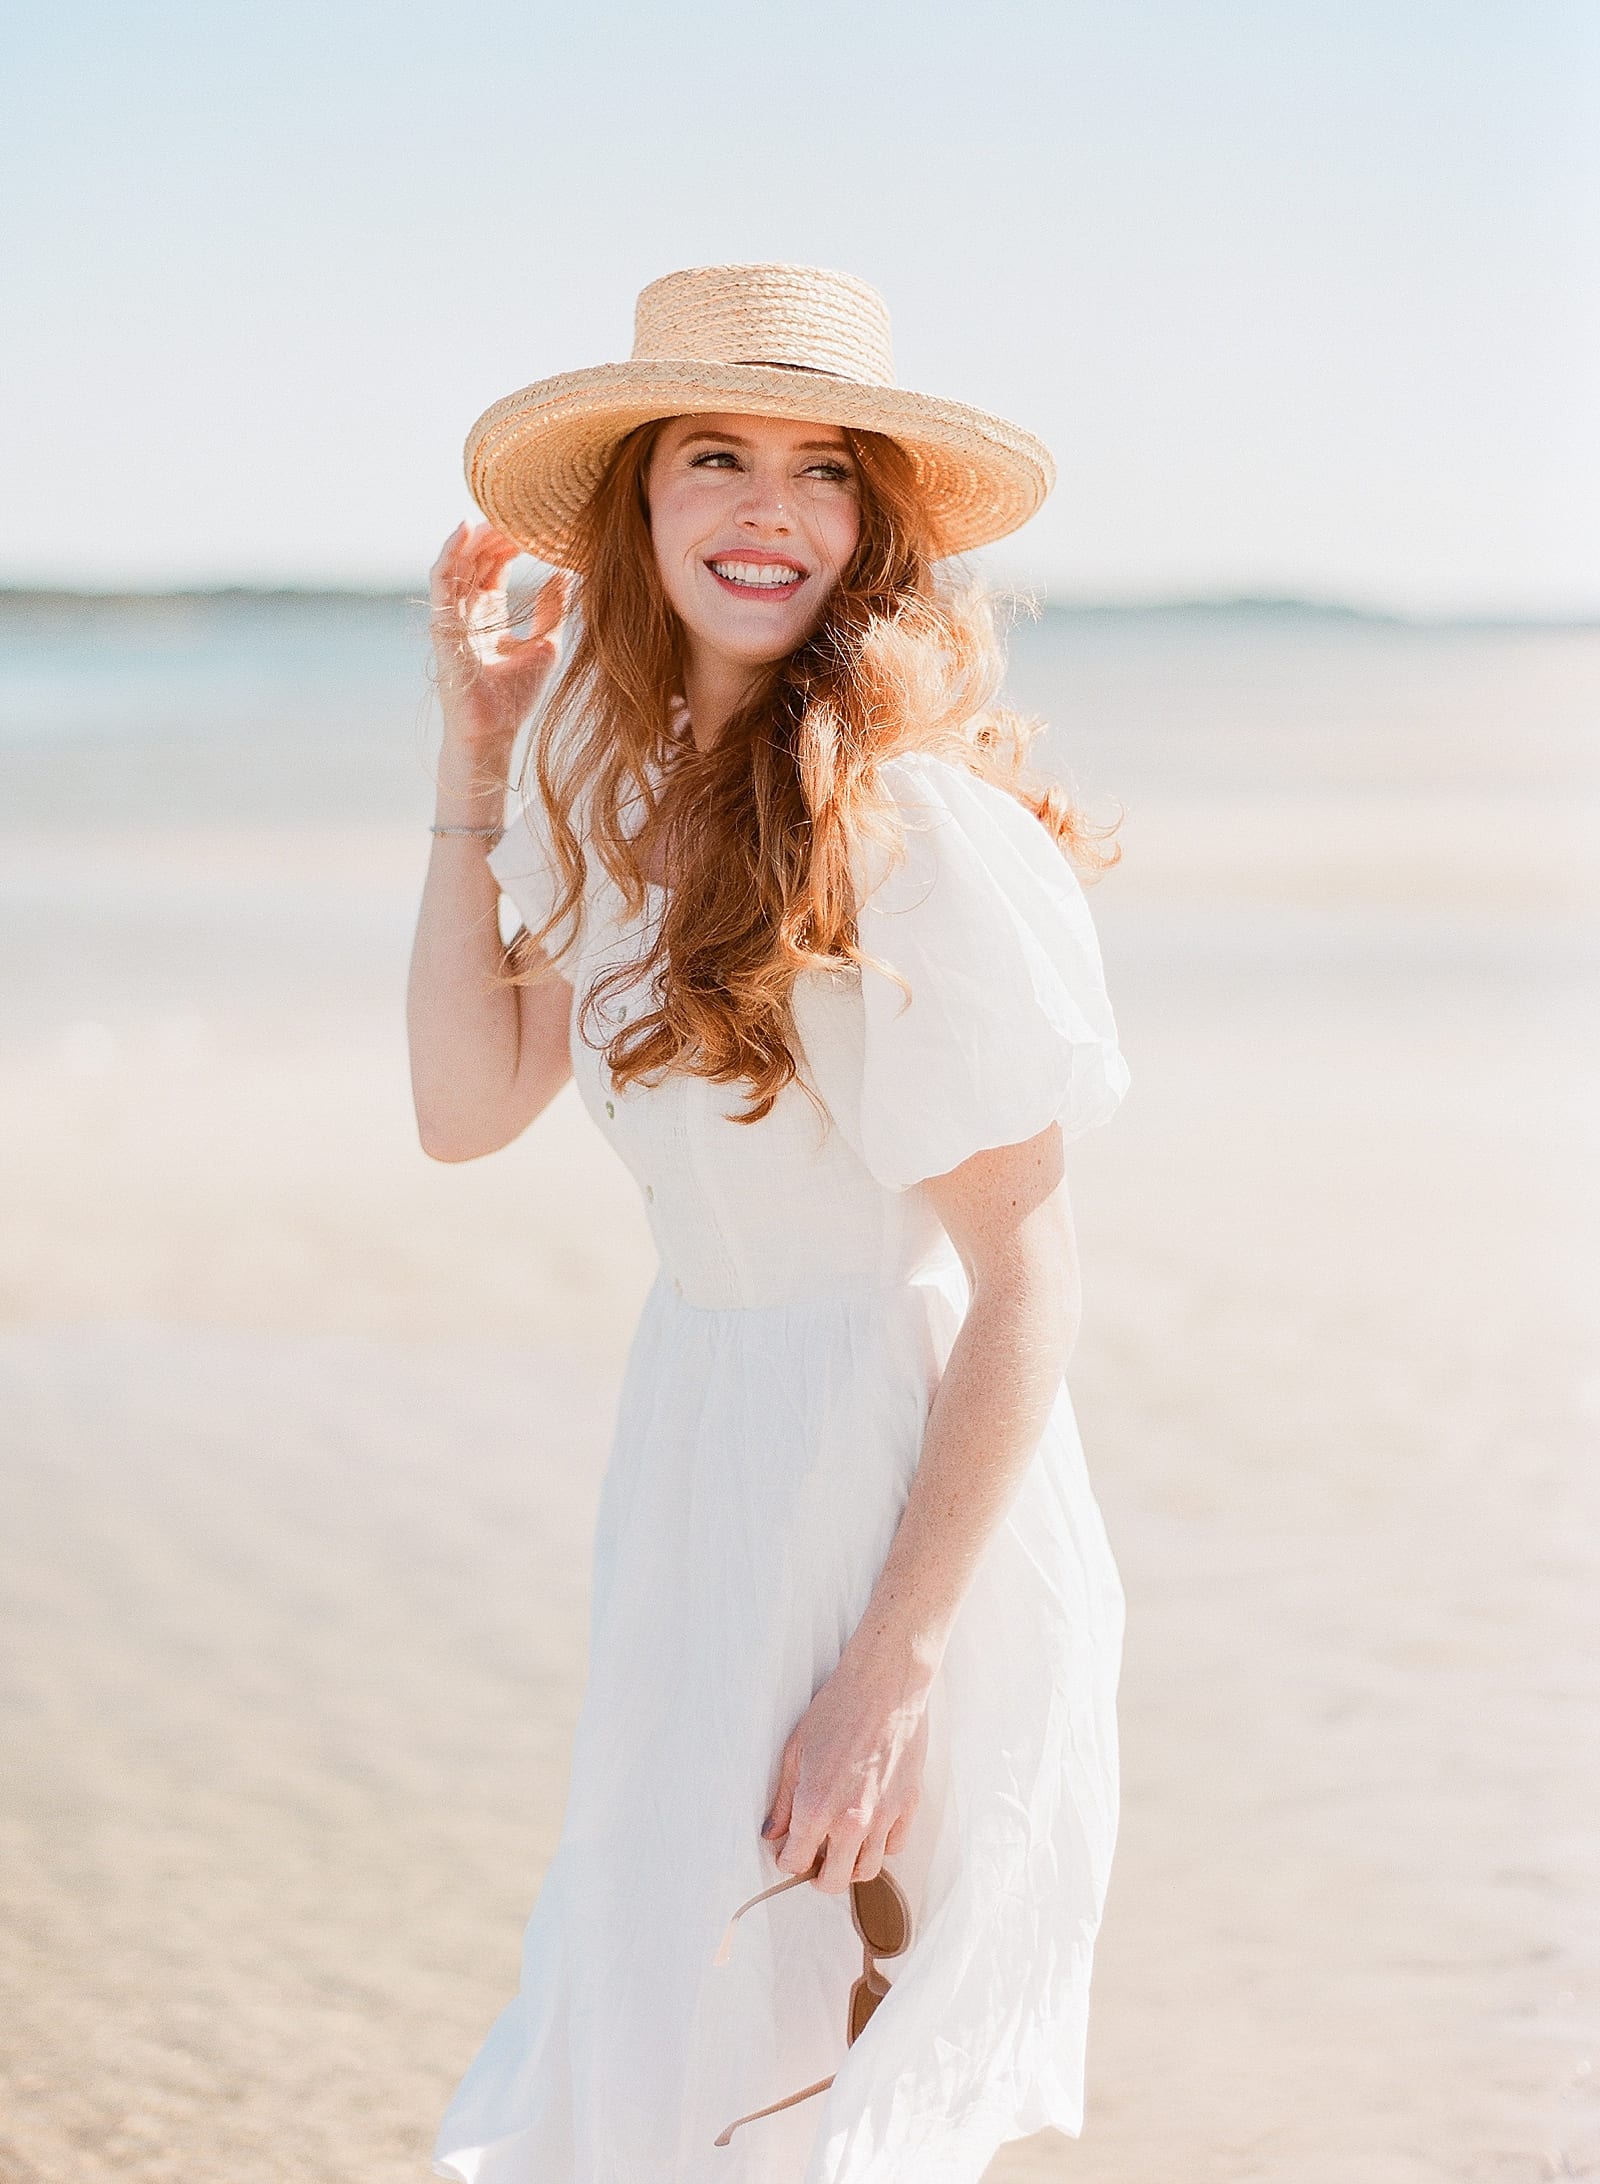 Beaufort SC Girl on Beach in White Dress and Sunhat Photo